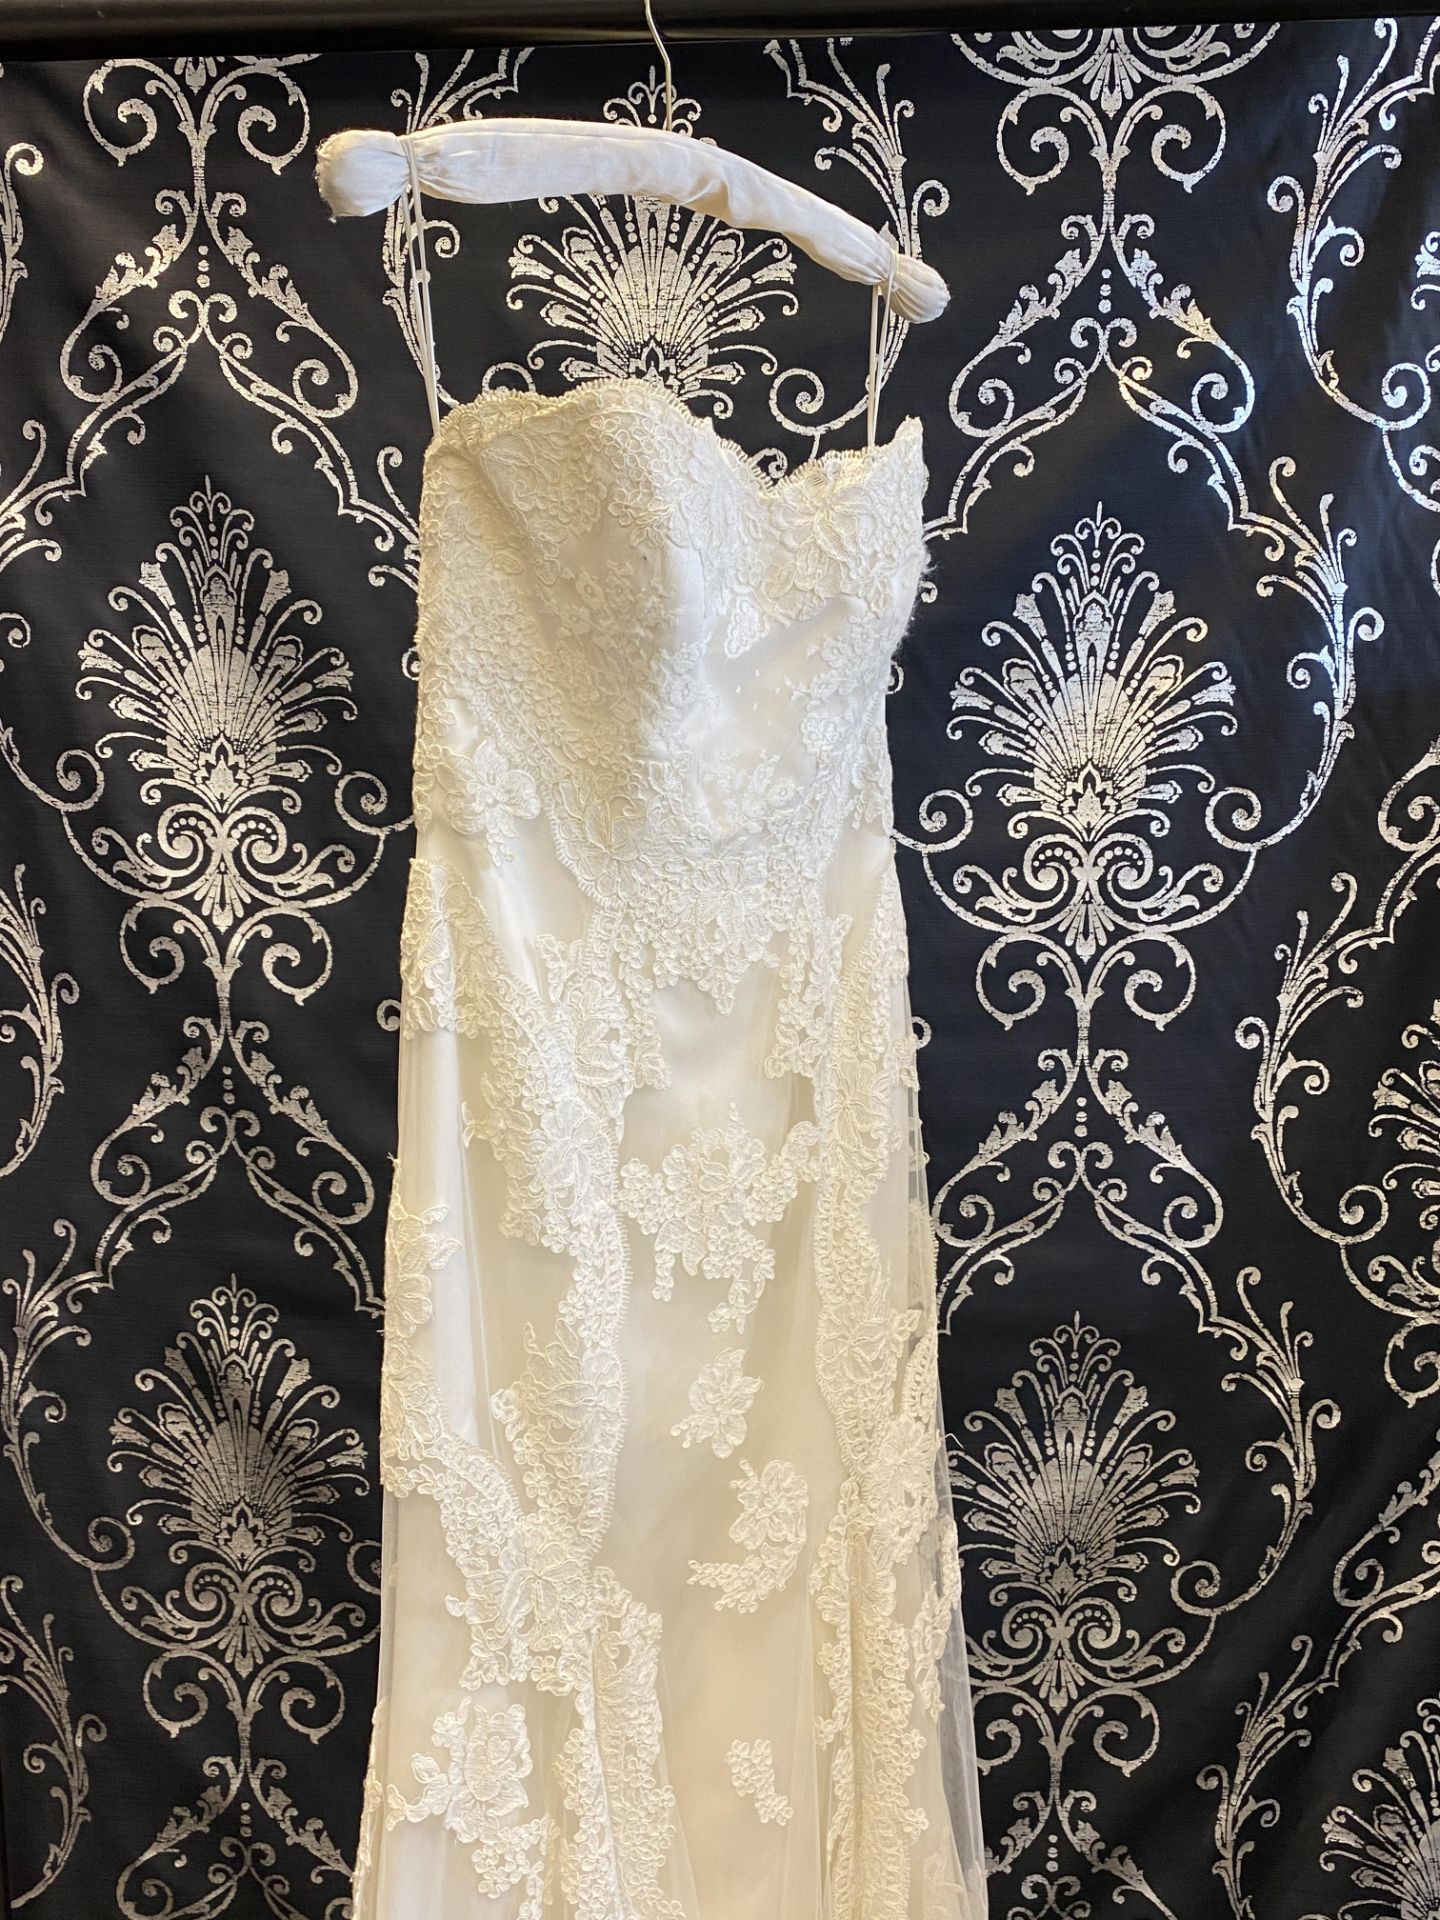 1 x LUSAN MANDONGUS 'Valli' Stunning Strapless Lace Overlay Designer Wedding Dress RRP £1,575 UK10 - Image 3 of 9